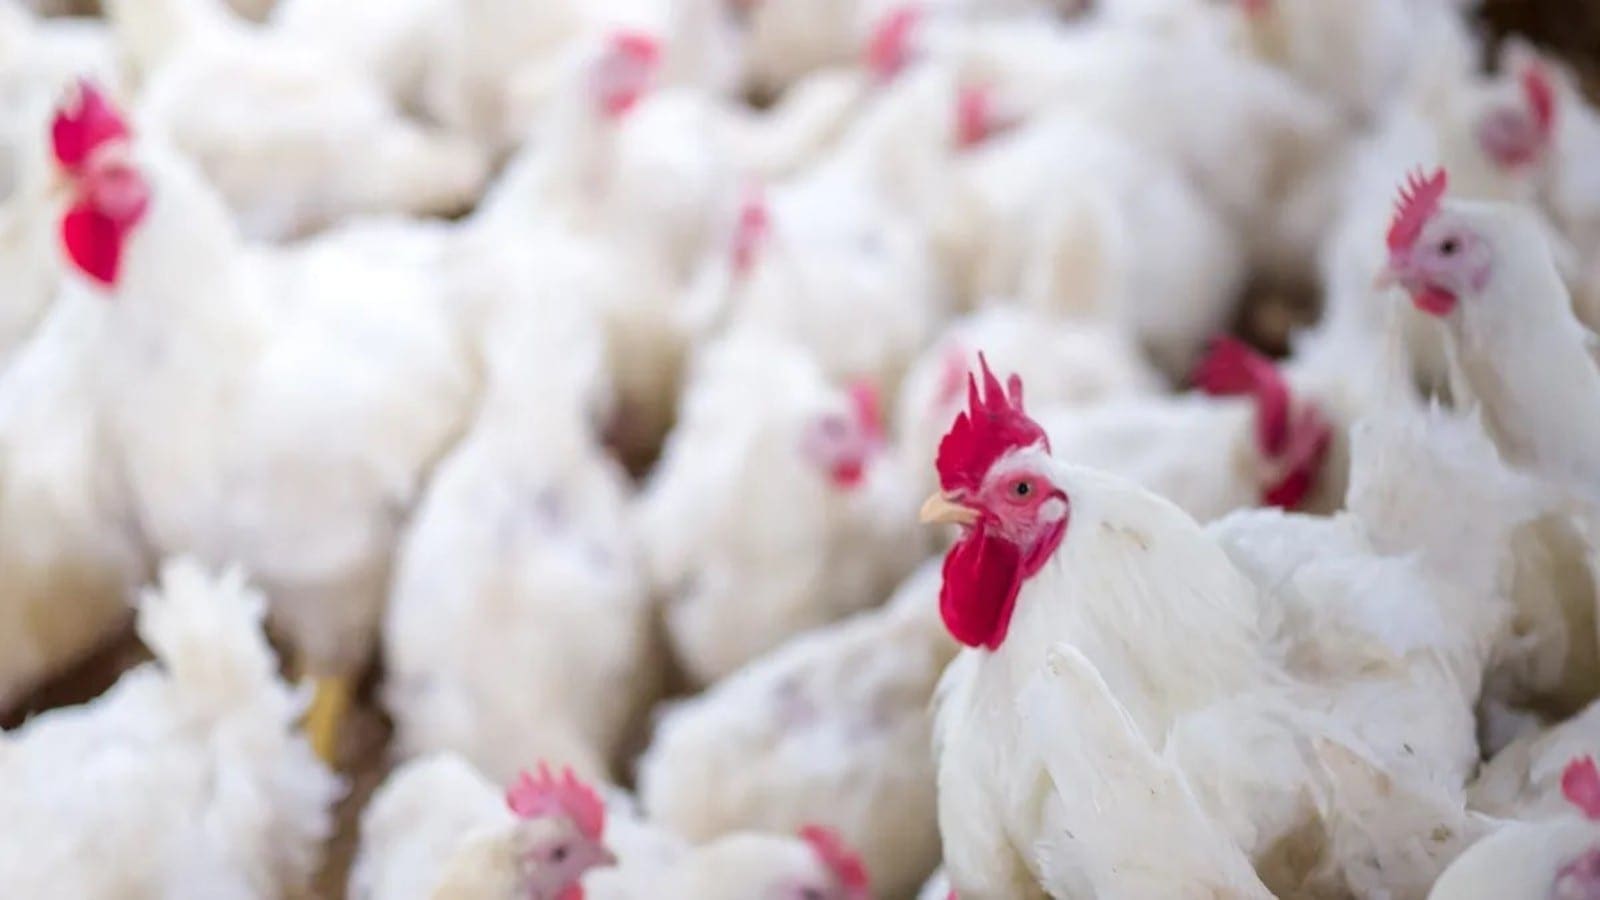 UK scientists utilize gene-editing to combat bird flu in chickens